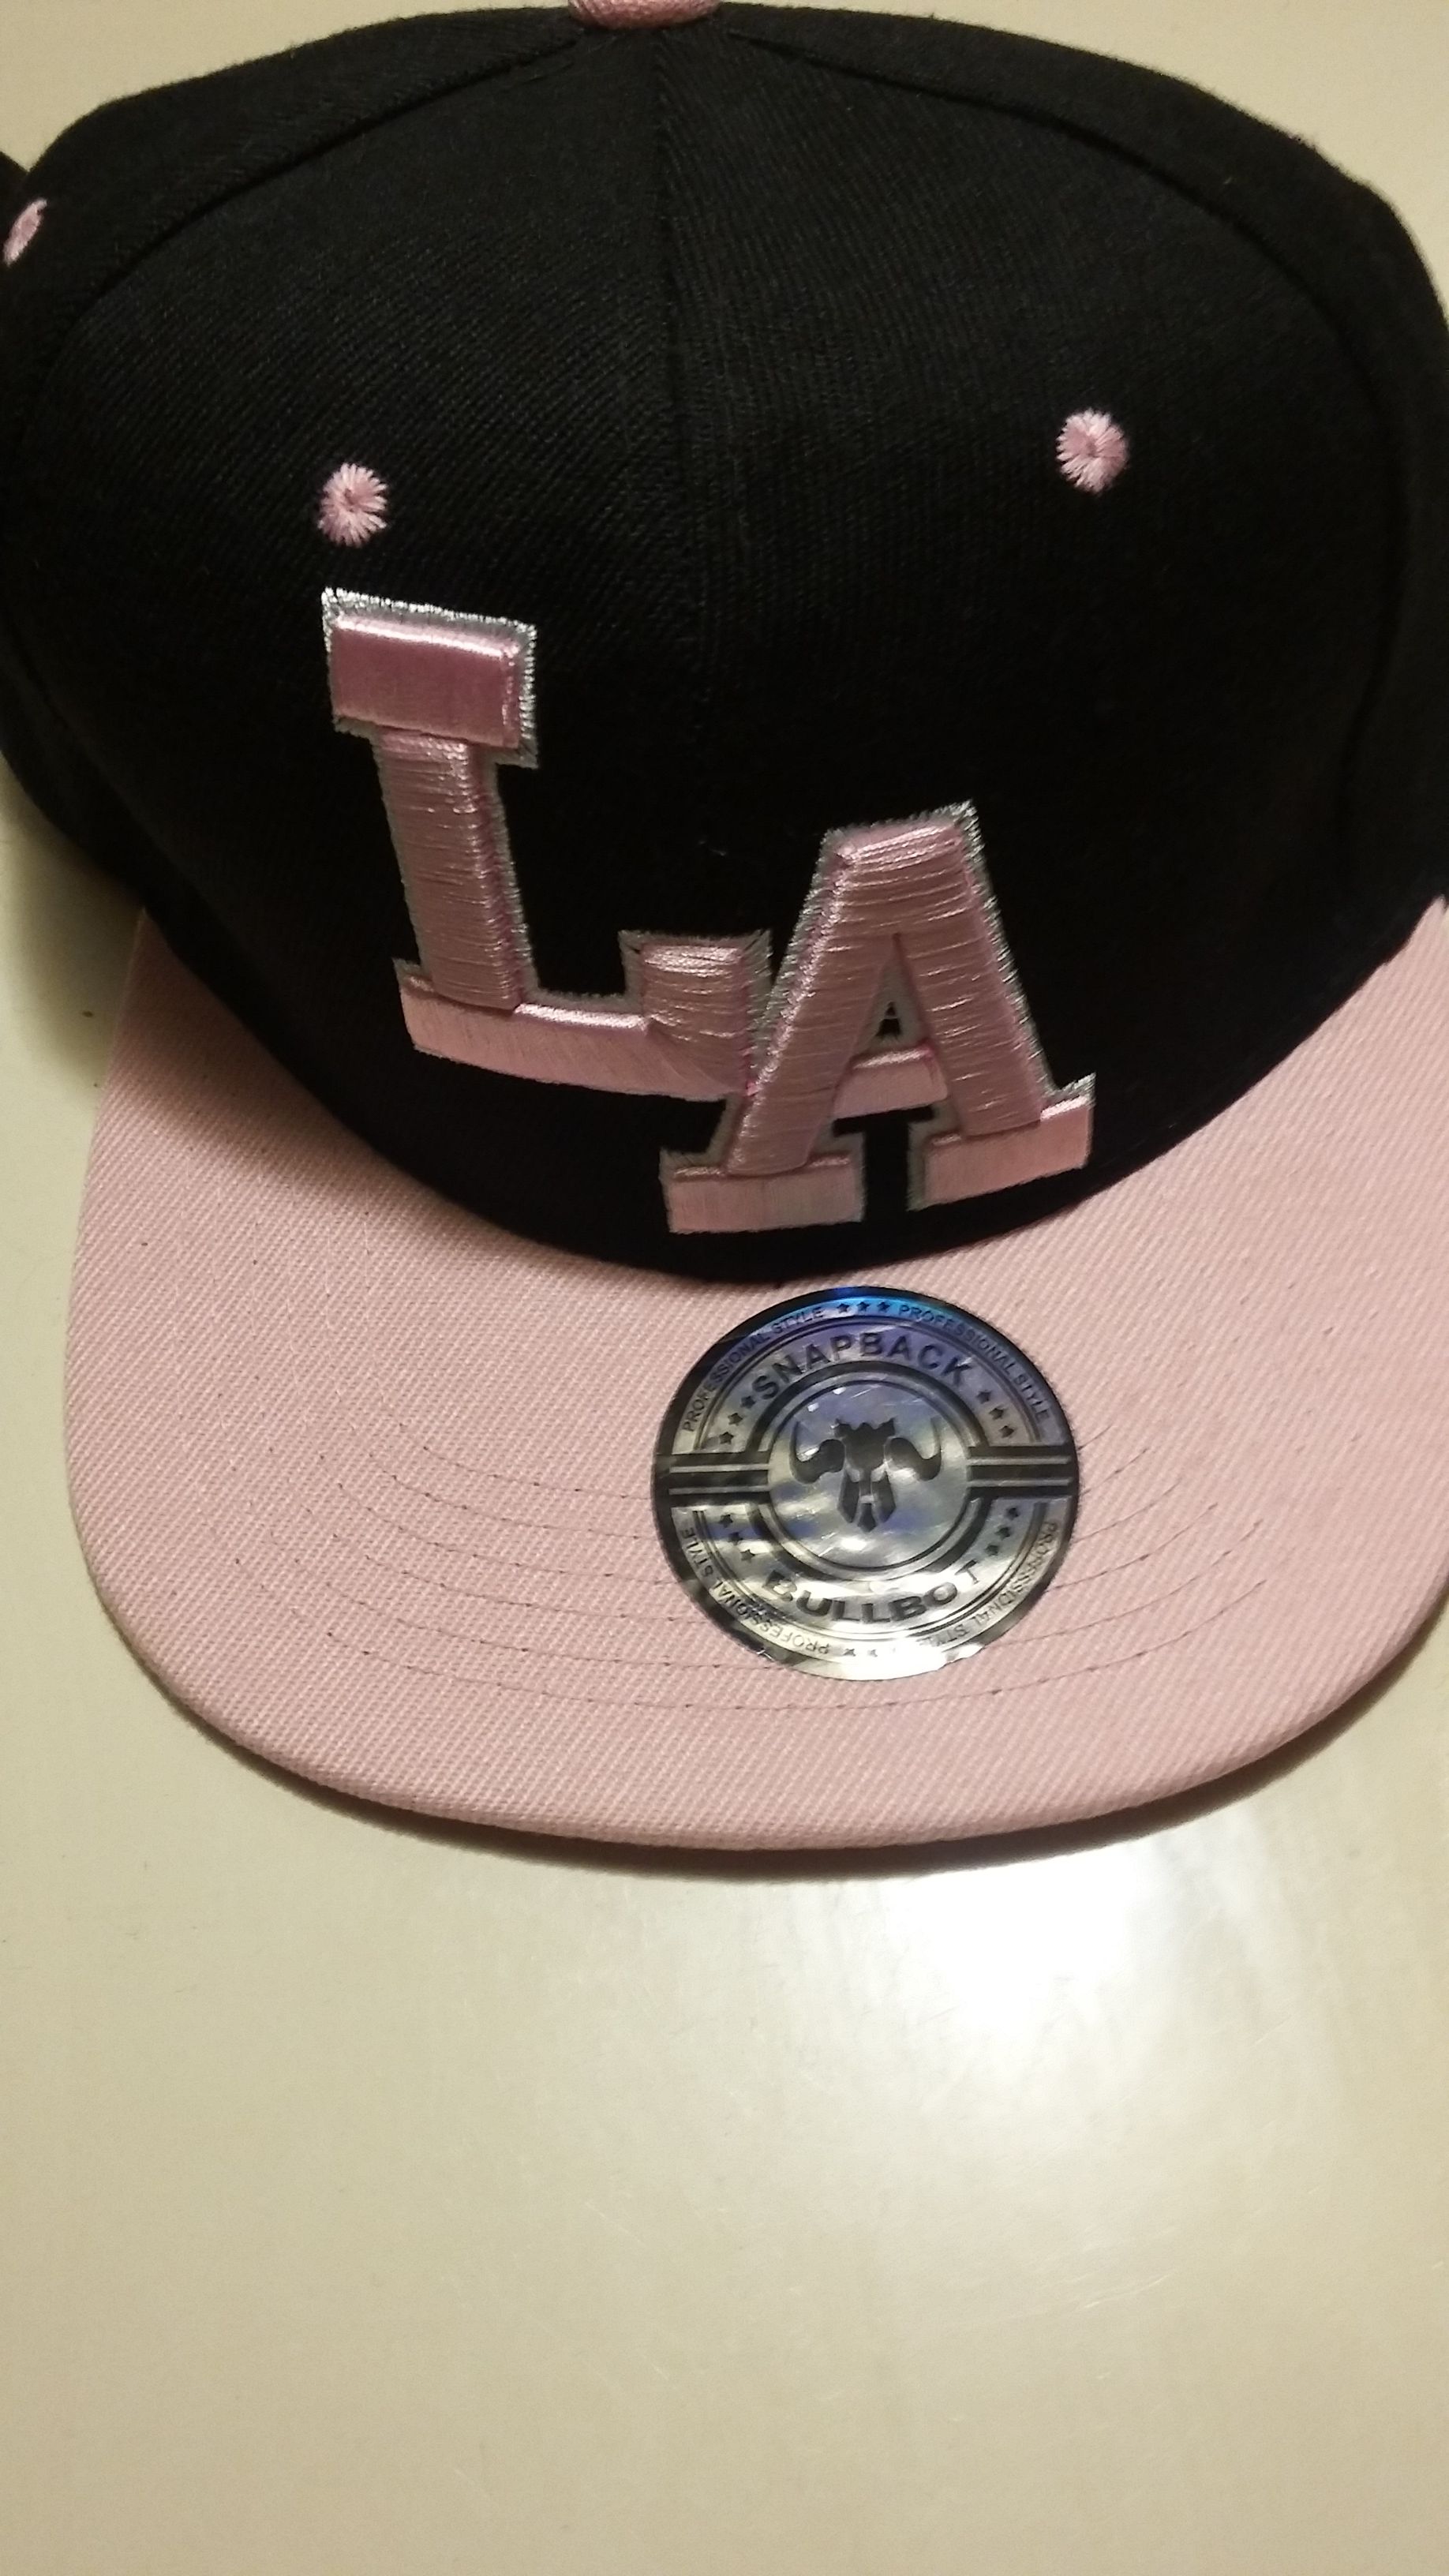 L.A. snap back hat